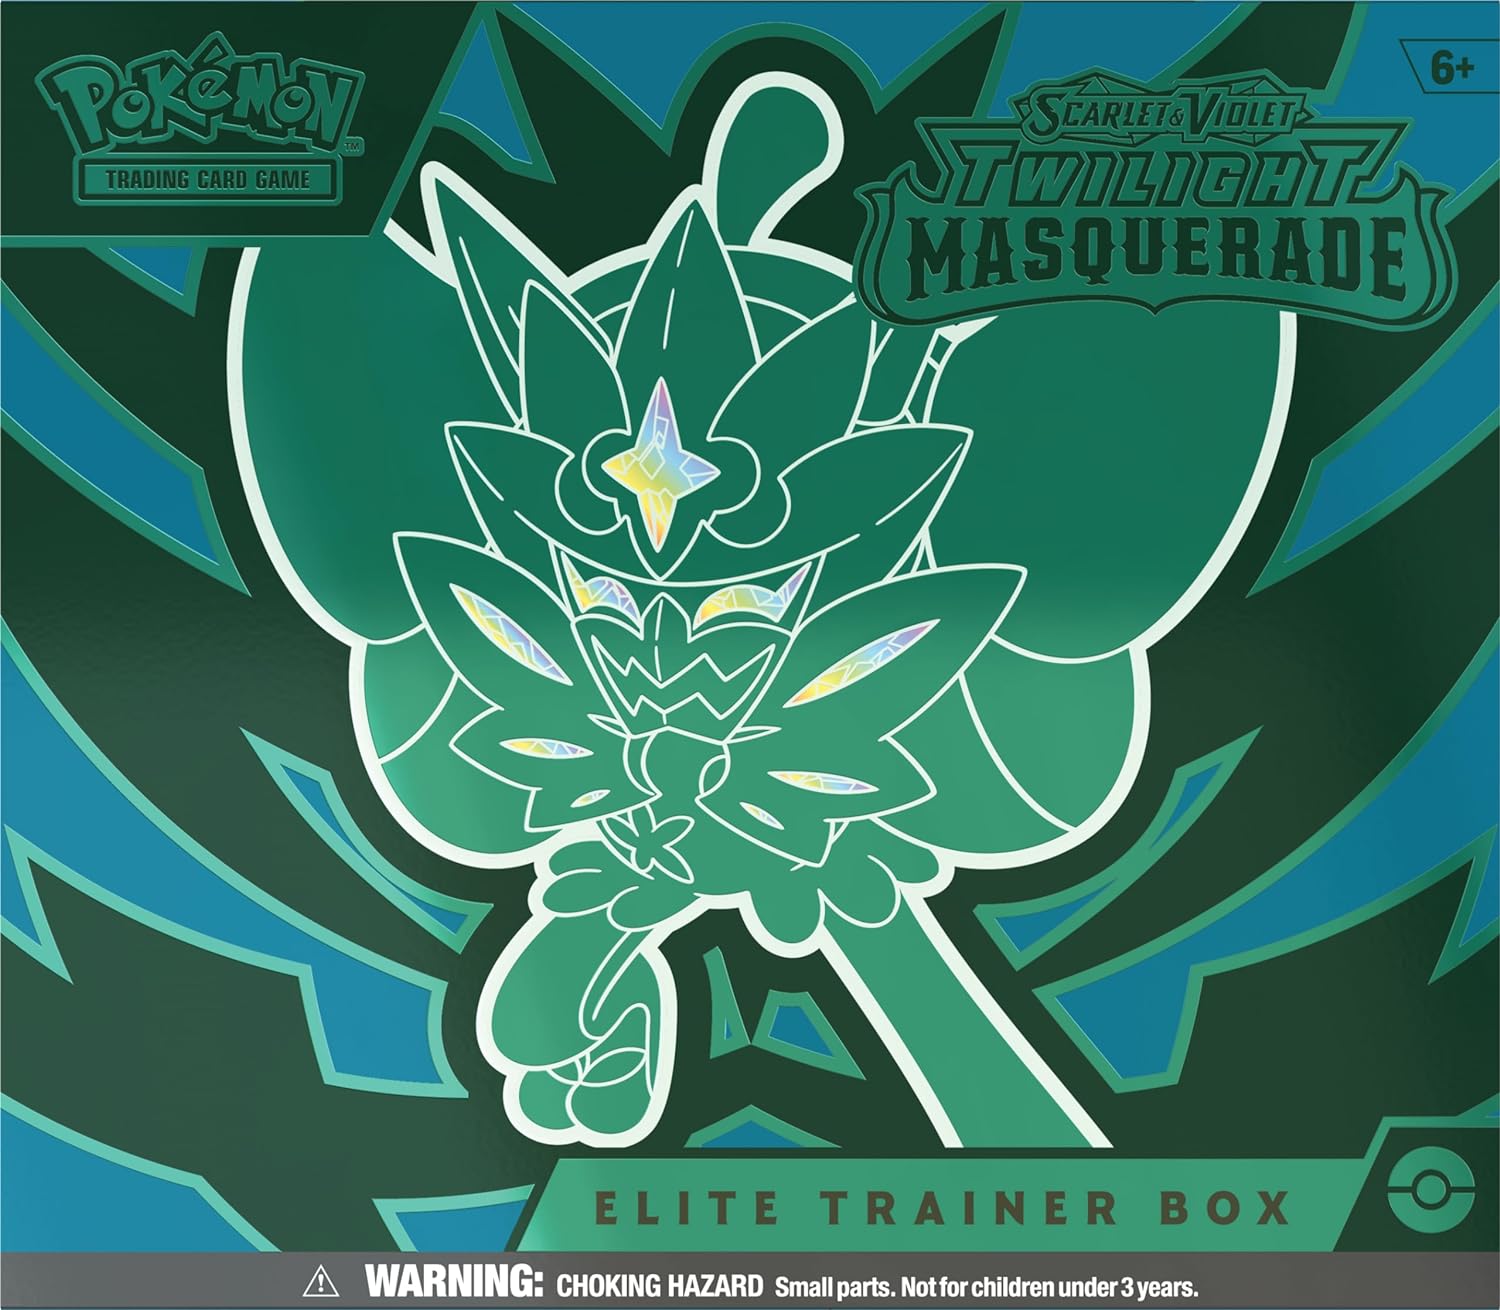 Pokémon - Twilight Masquerade Elite Trainer Box - EN - CardCosmos